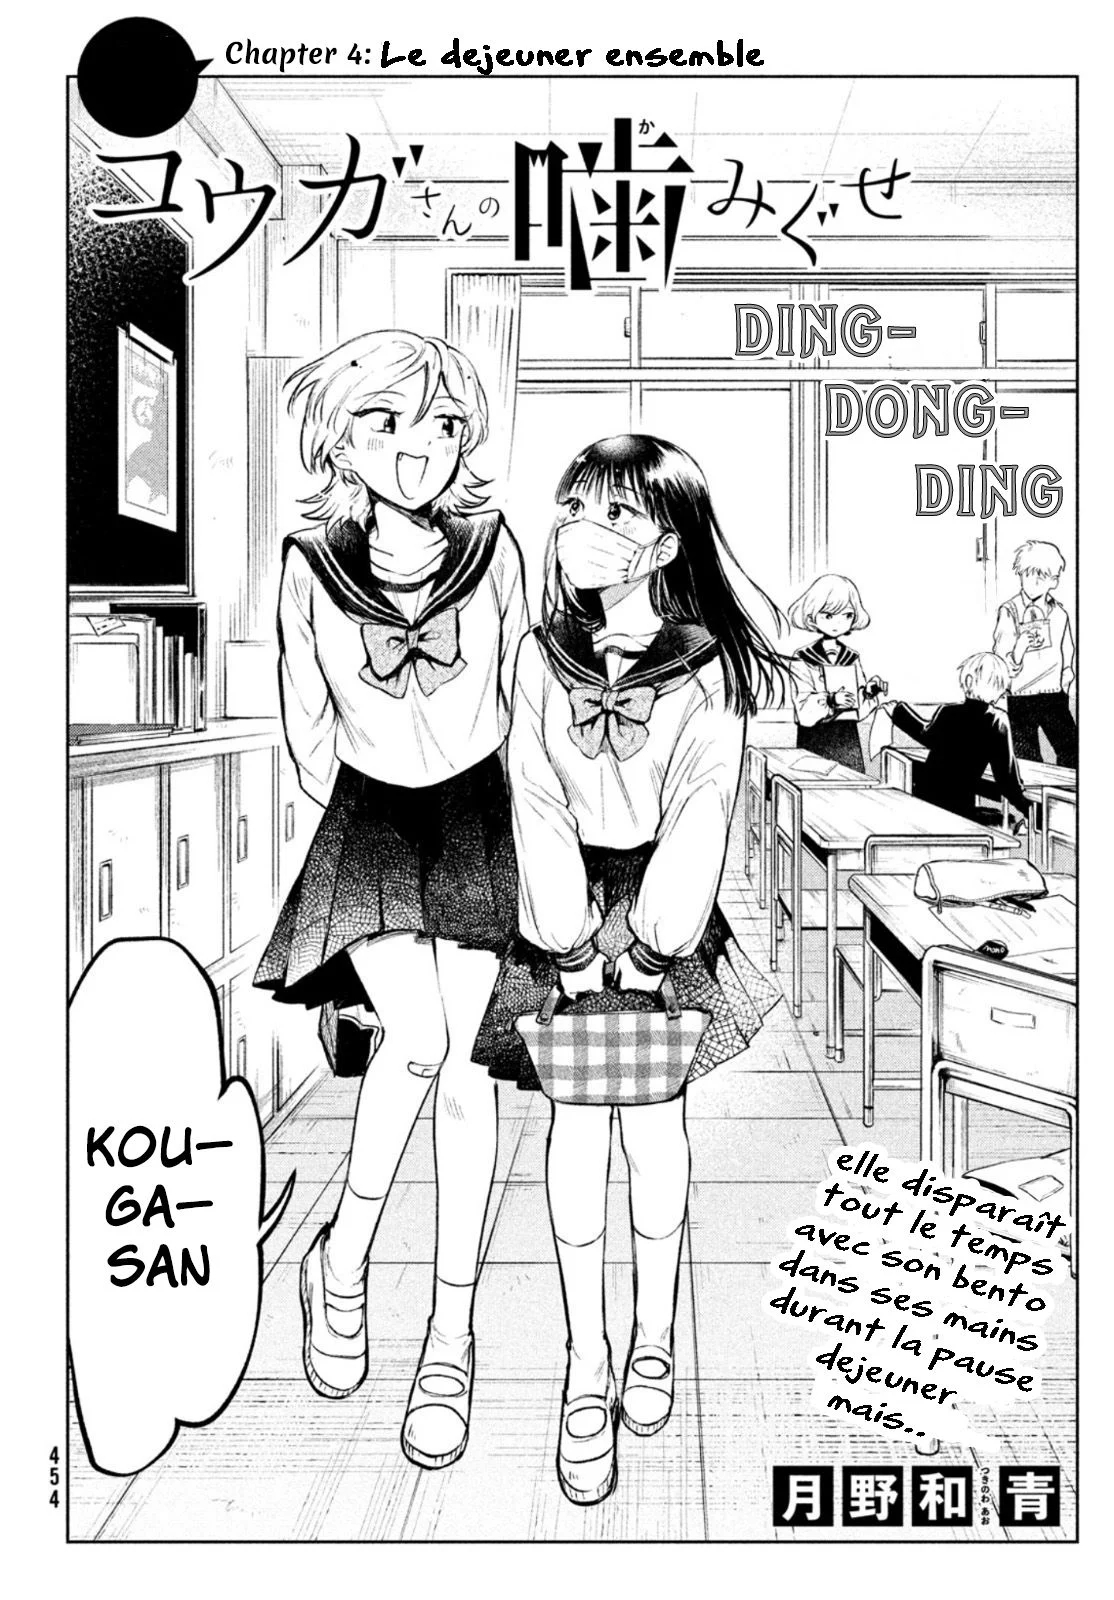 Kouga-San No Kamiguse: Chapter 4 - Page 1